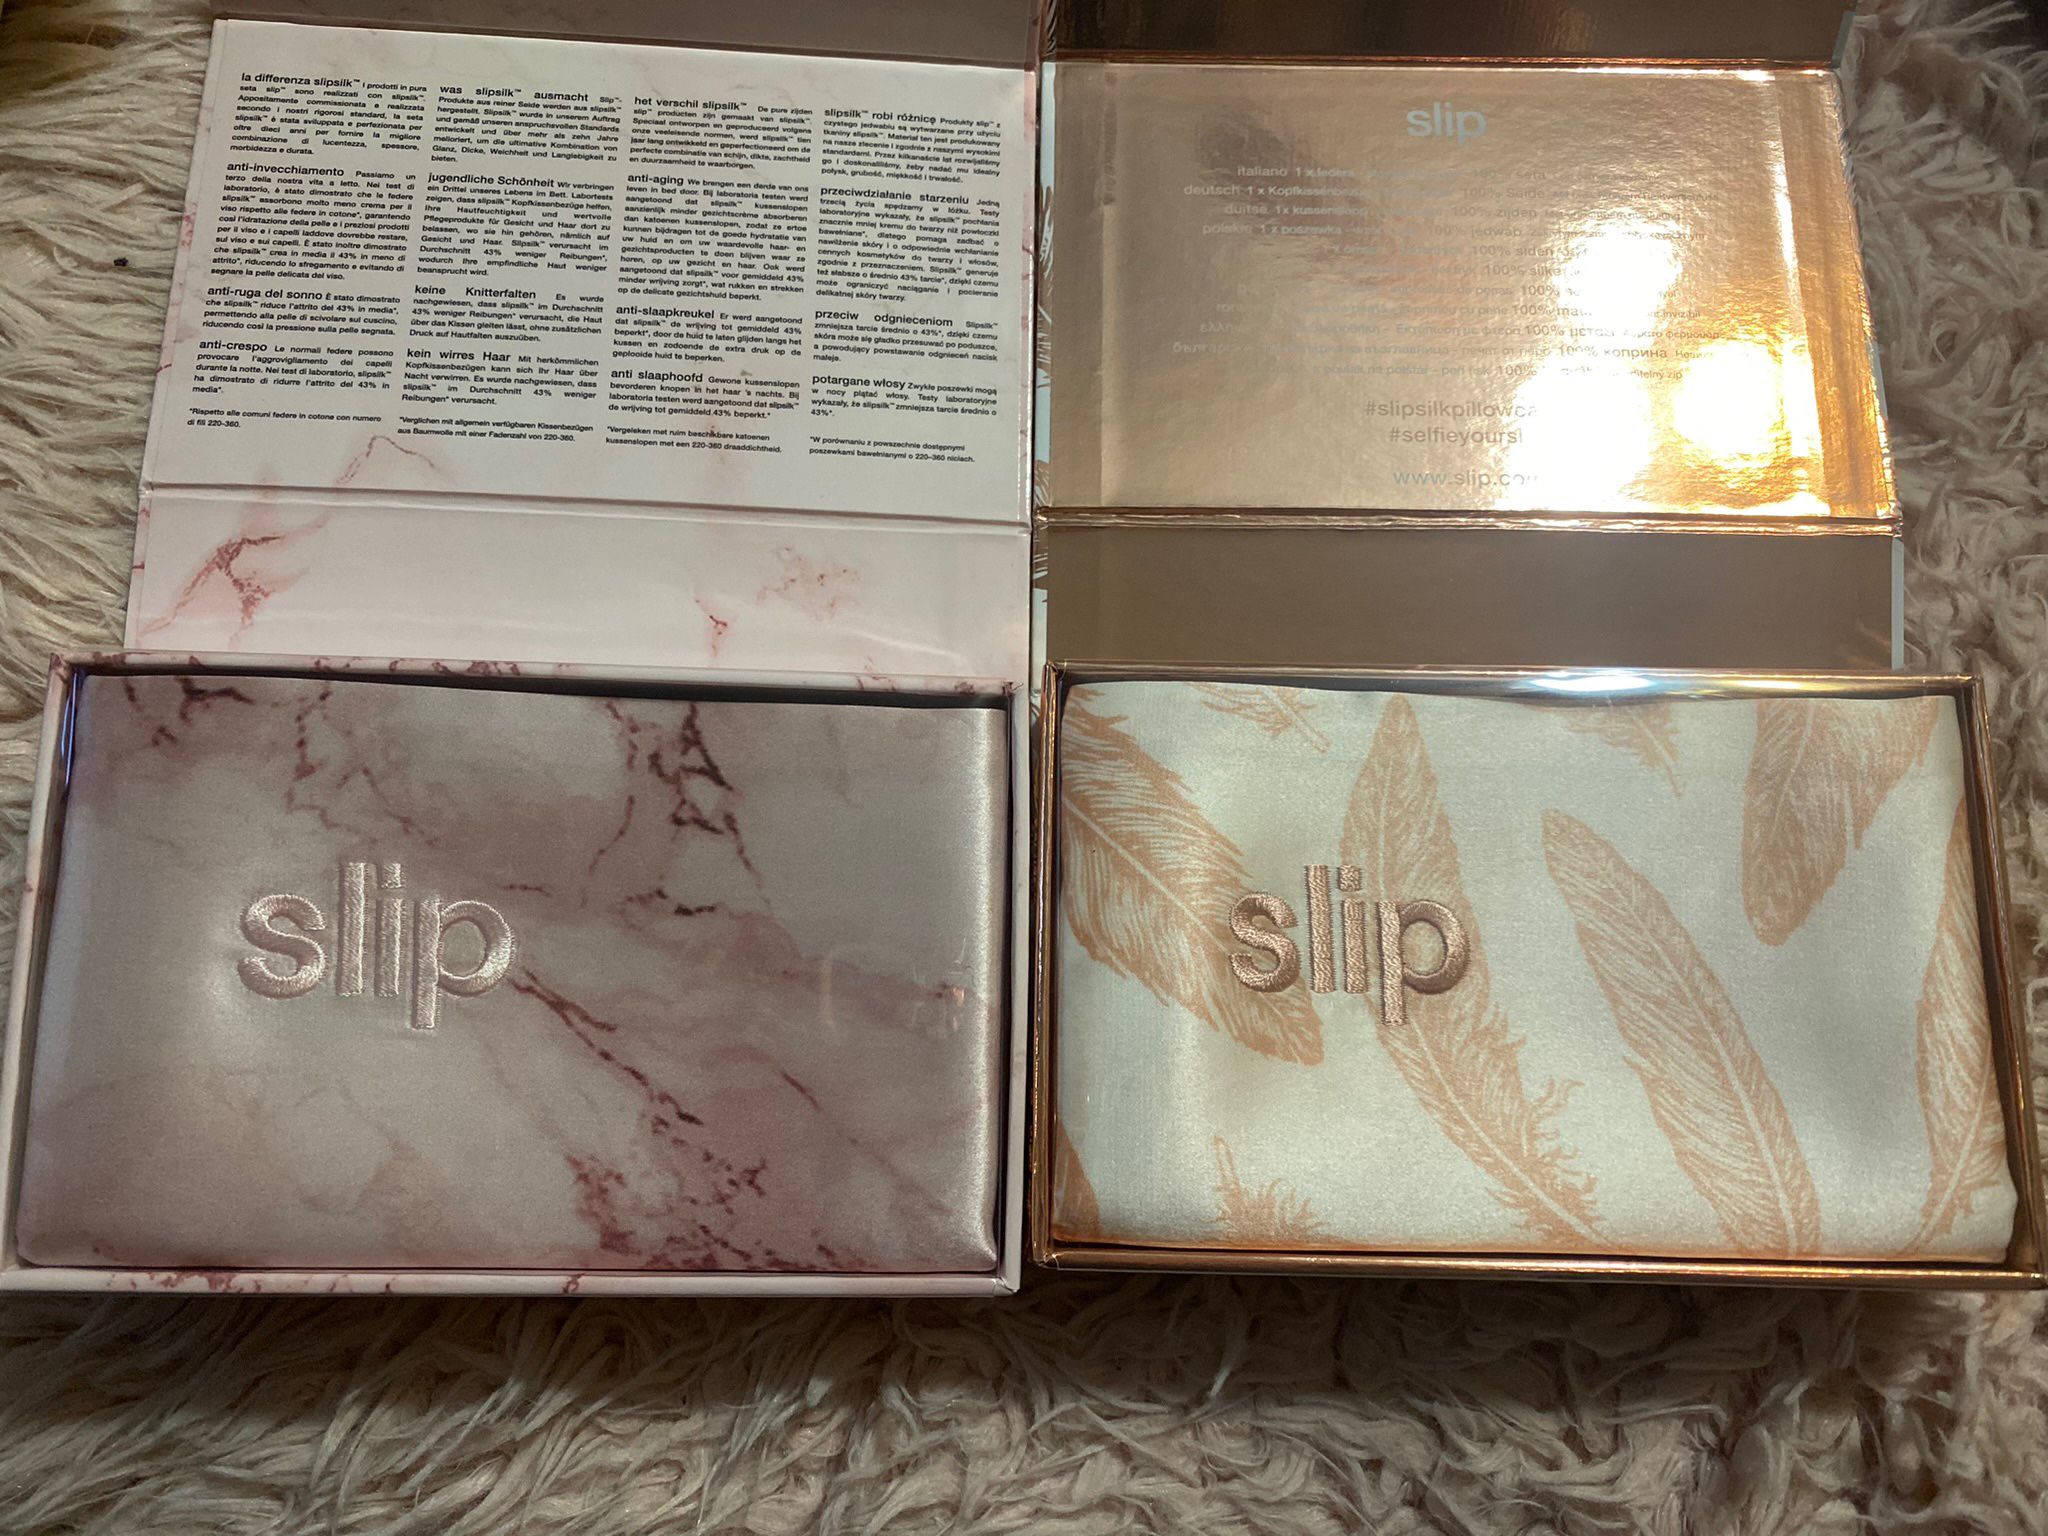 Slip Pure Silk Pillow Cases